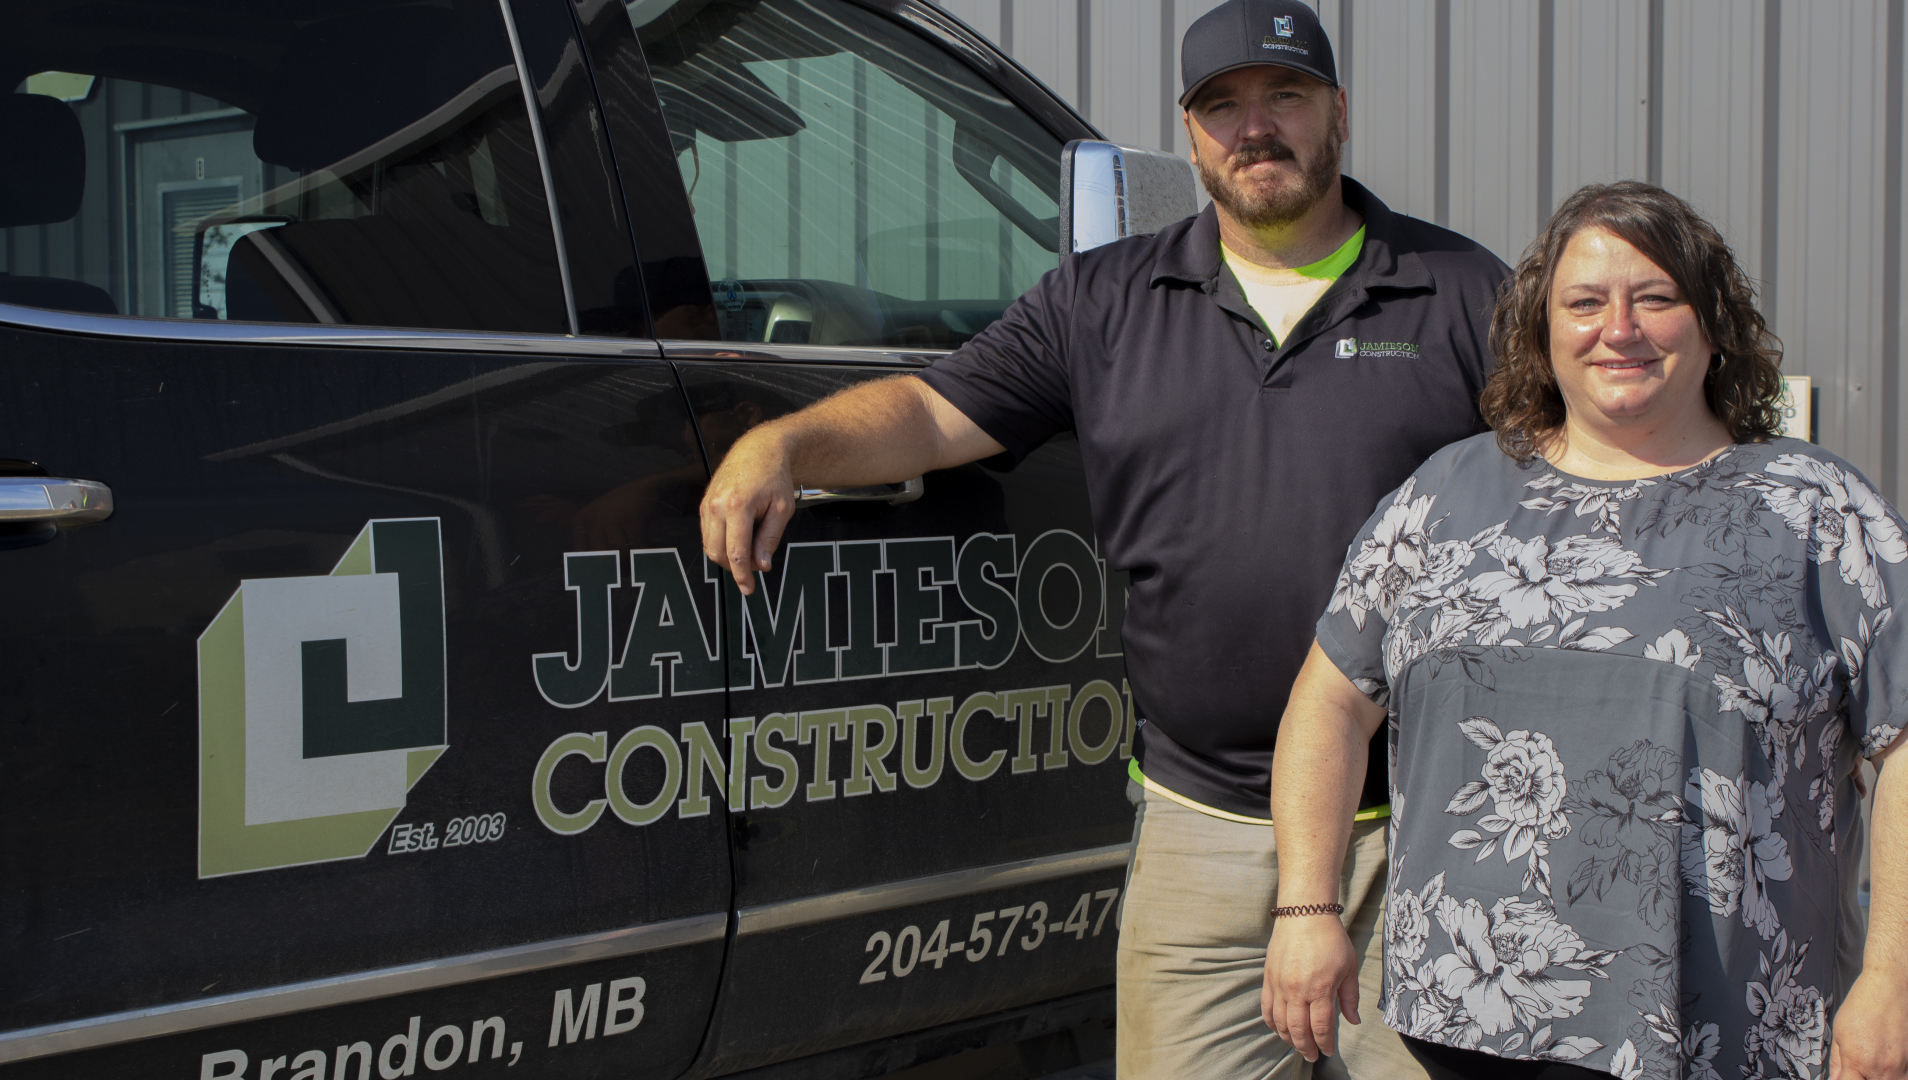 Scott Jamieson, Assiniboine alum and owner of Jamieson Construction